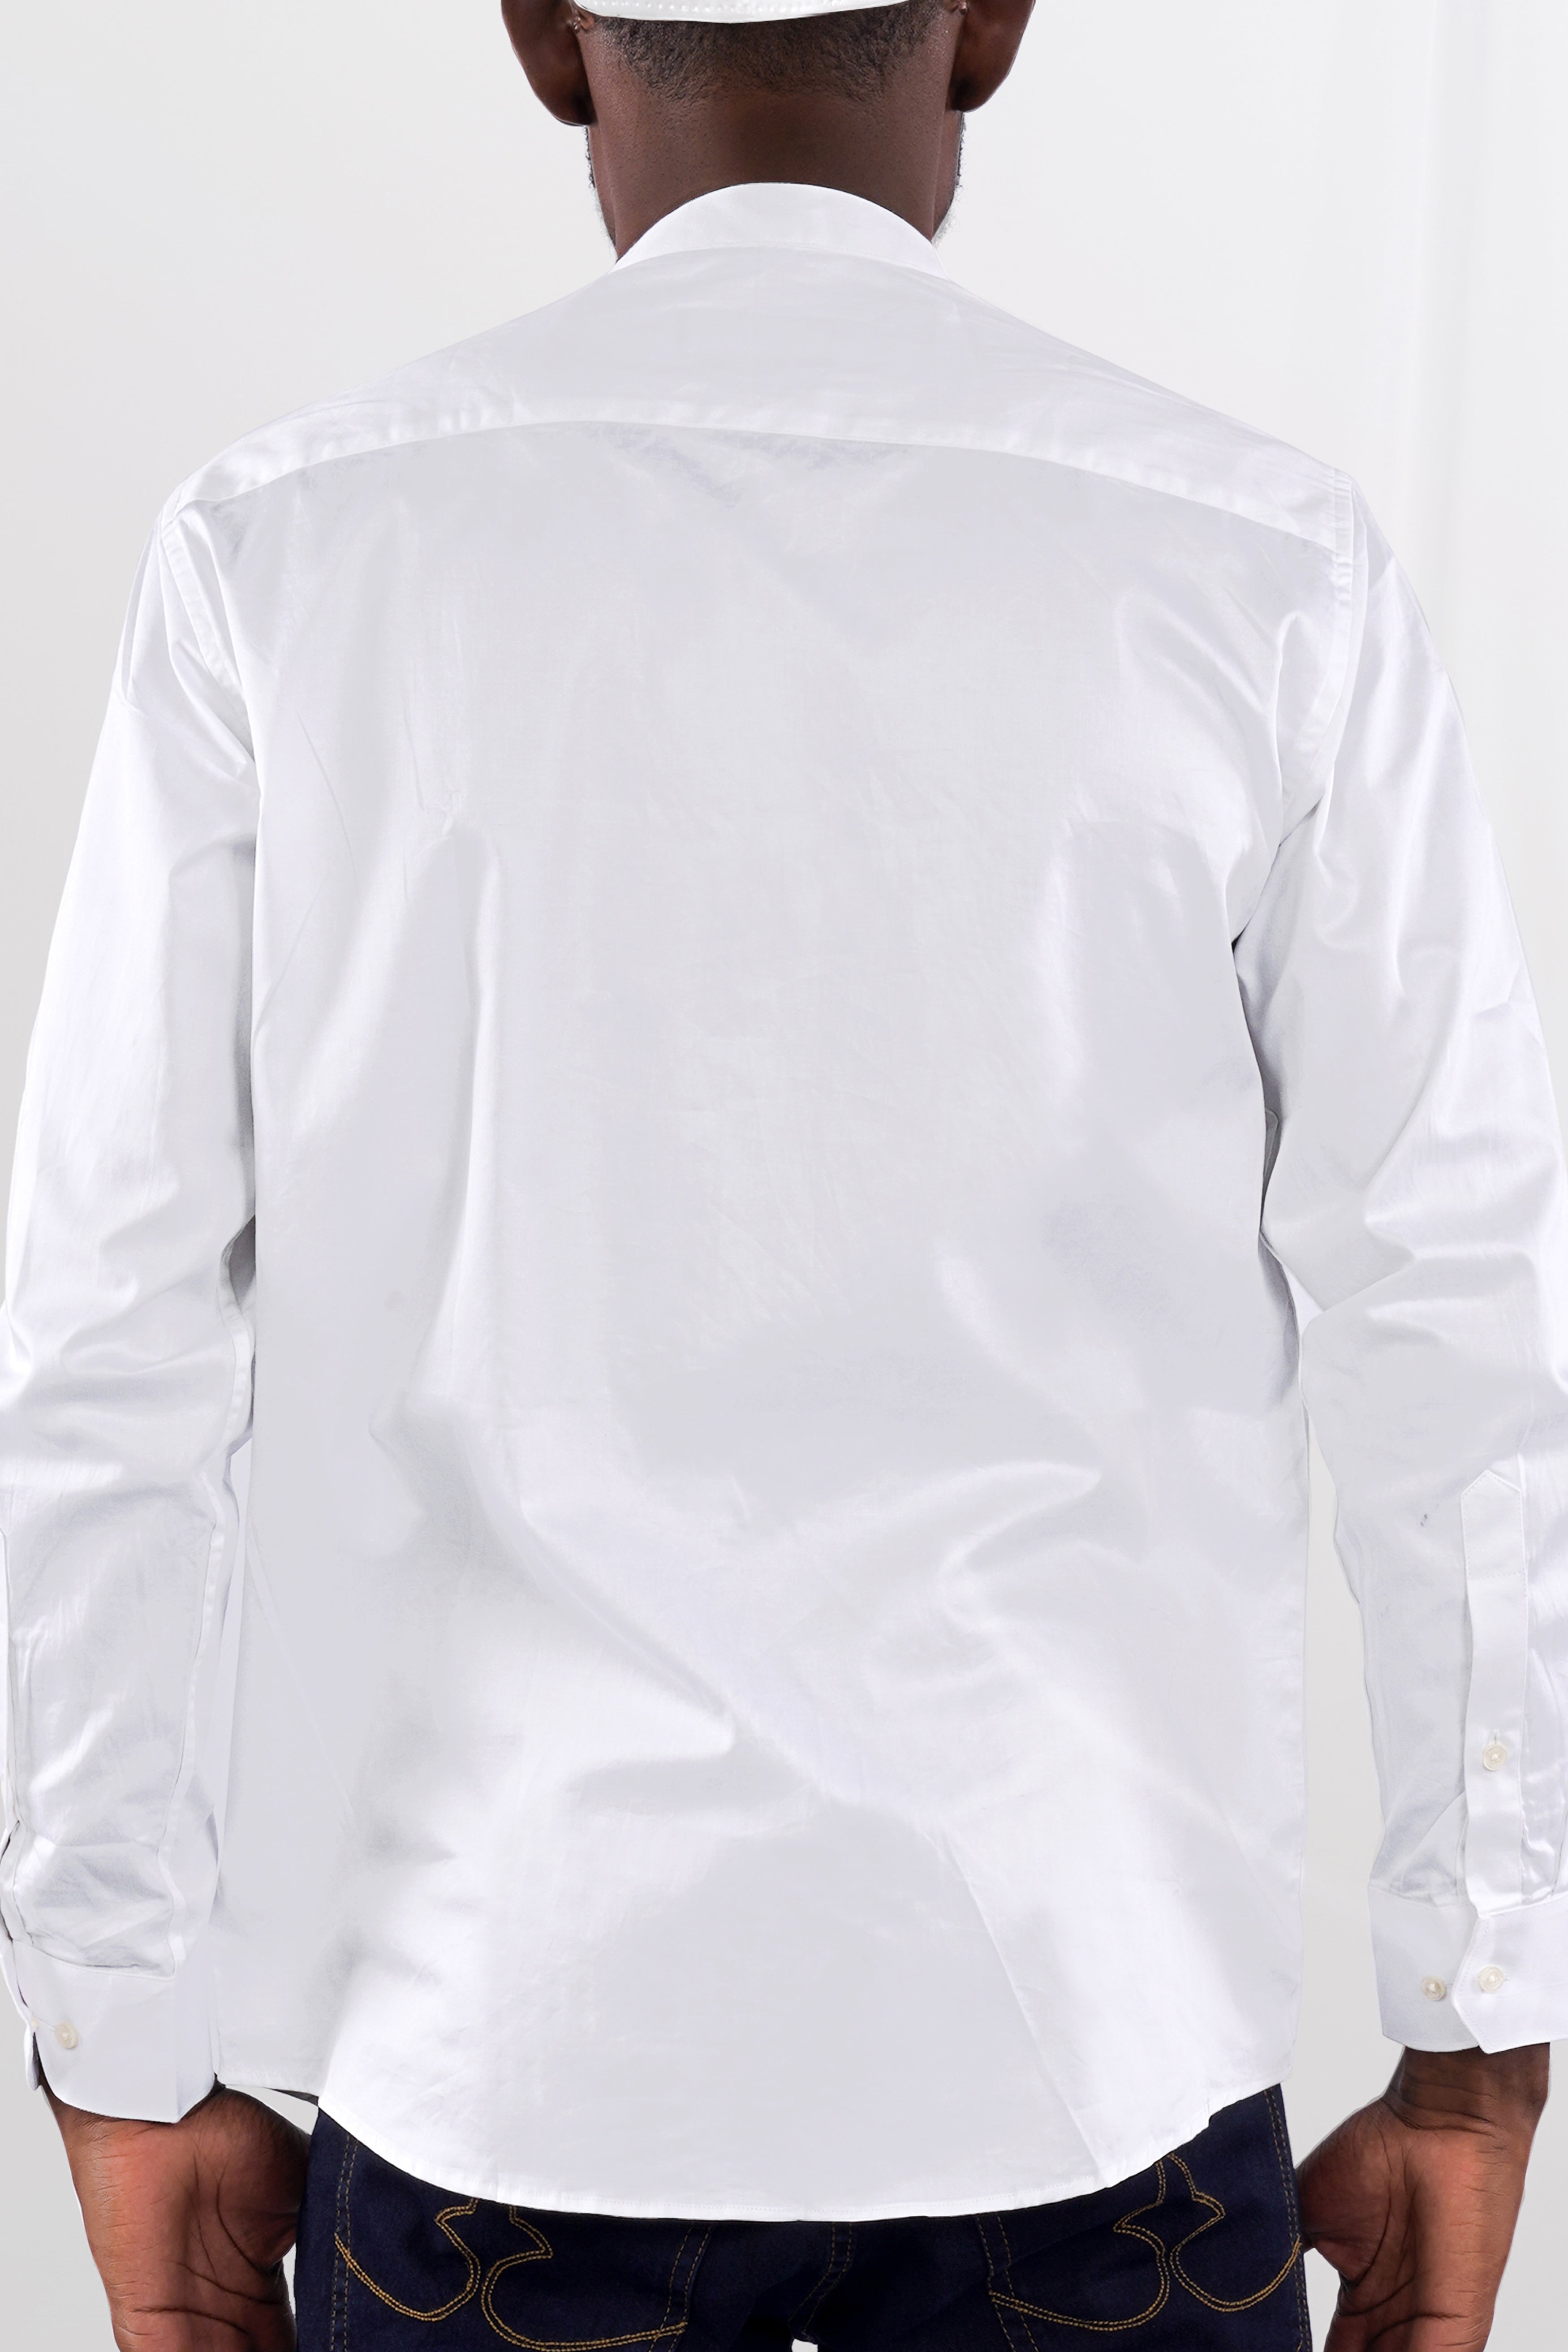 Bright White with  Ziggurat Printed Super Soft Premium Cotton Shirt